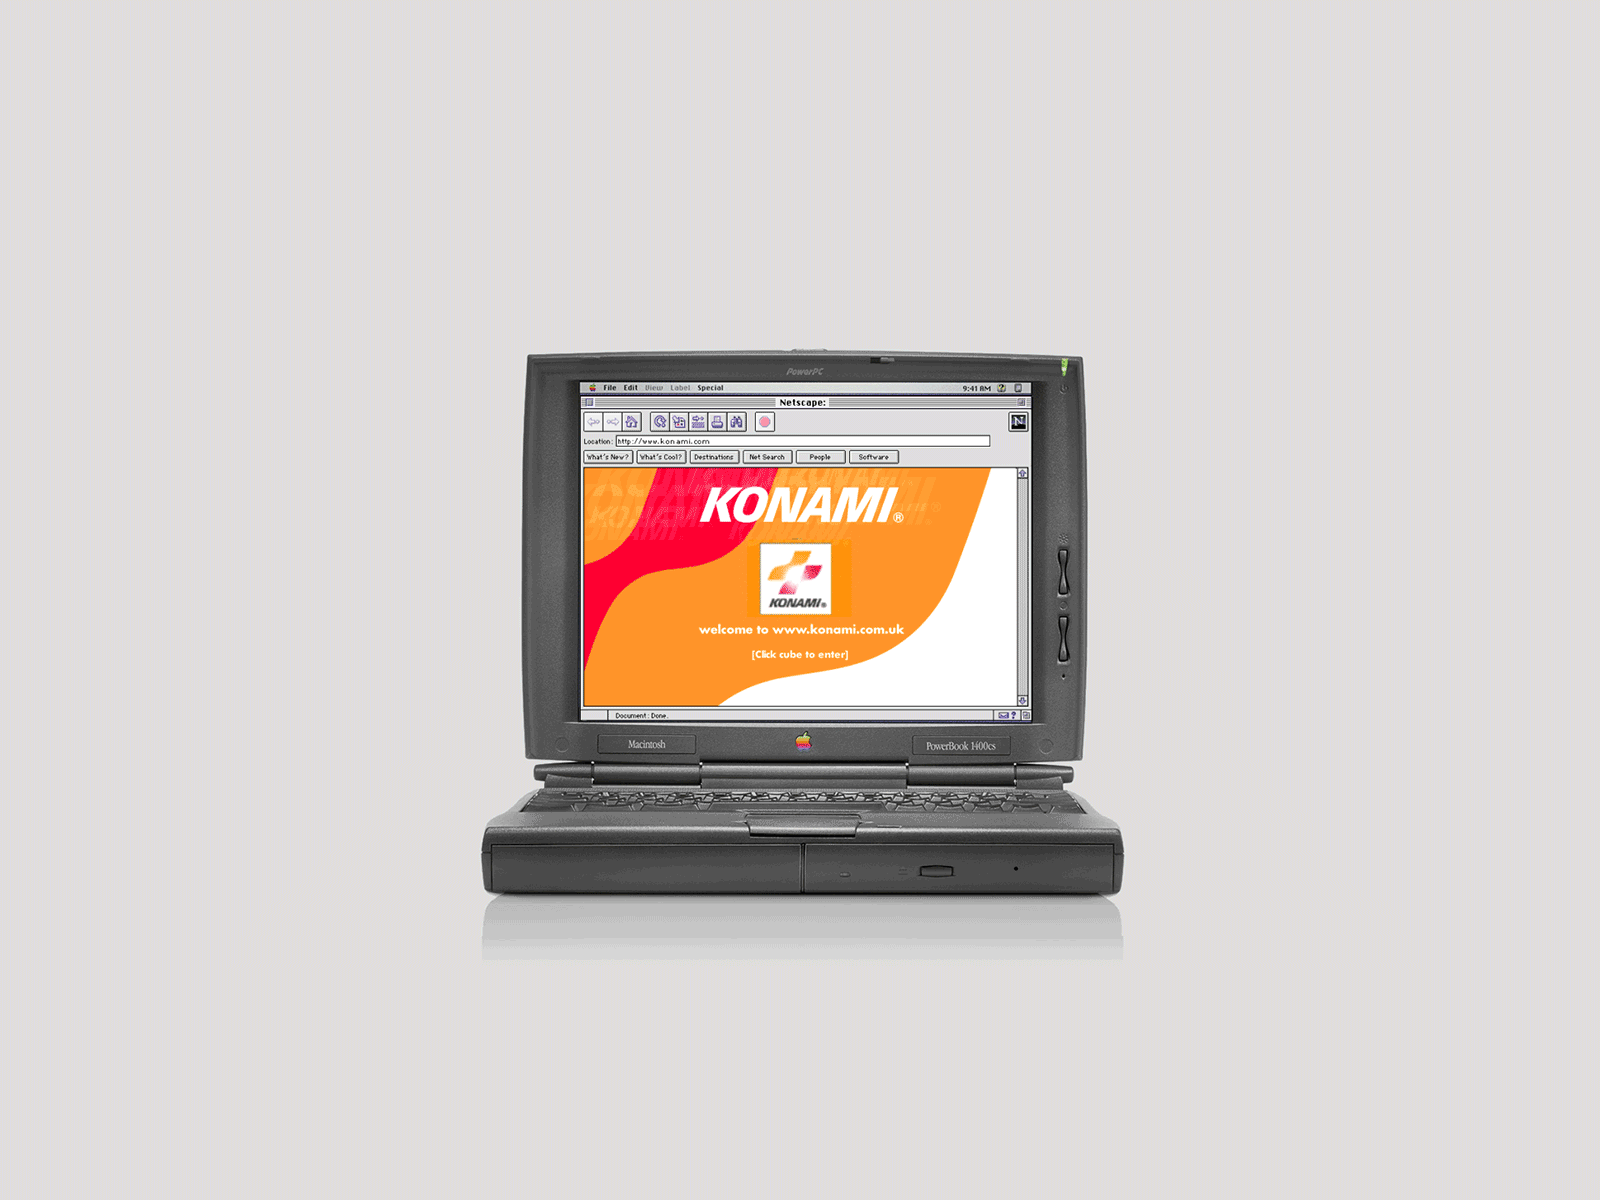 1997 Konami EMEA Website 1990s 3d logo animated spinning logo ui vintage design website